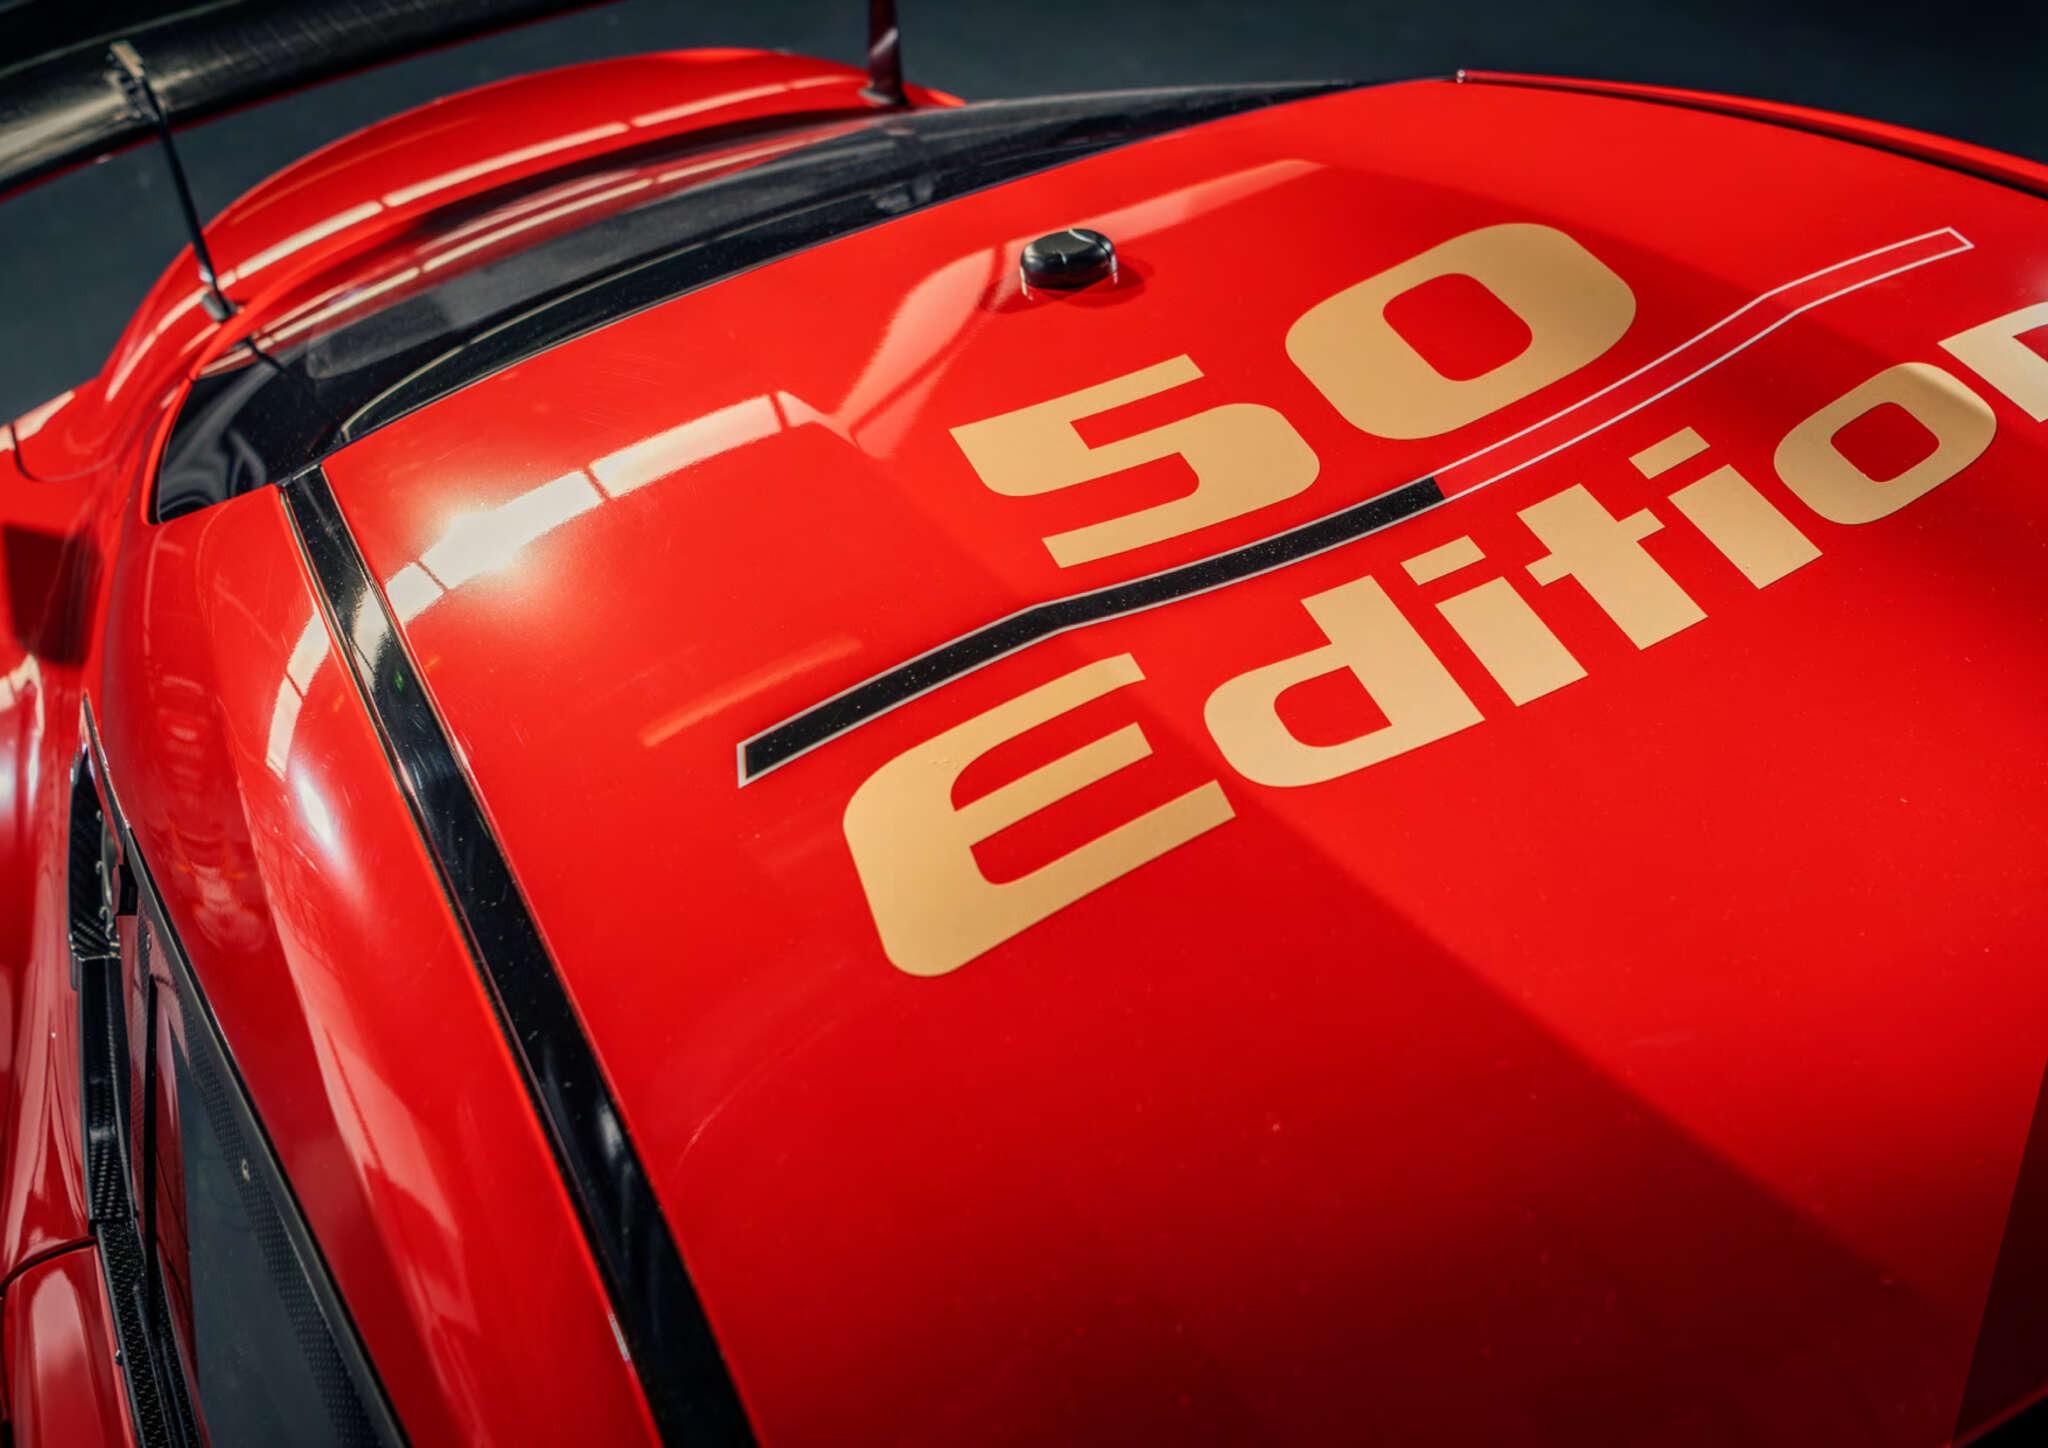 限量6部最紅GR Supra GT4 50 Edition賽車